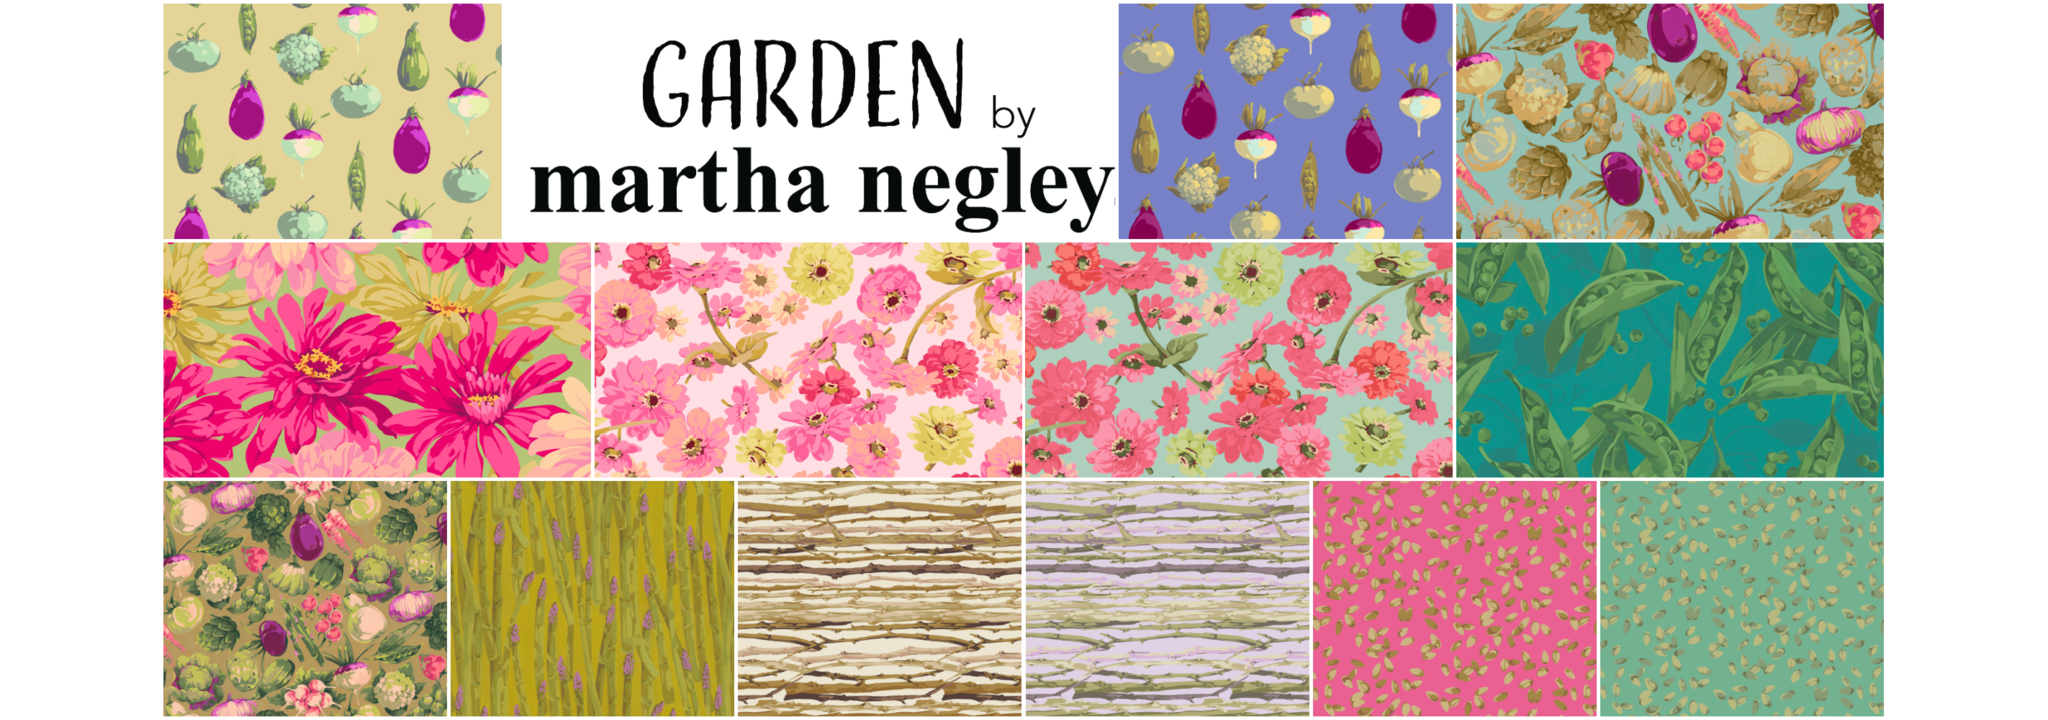 Garden by Martha Negley